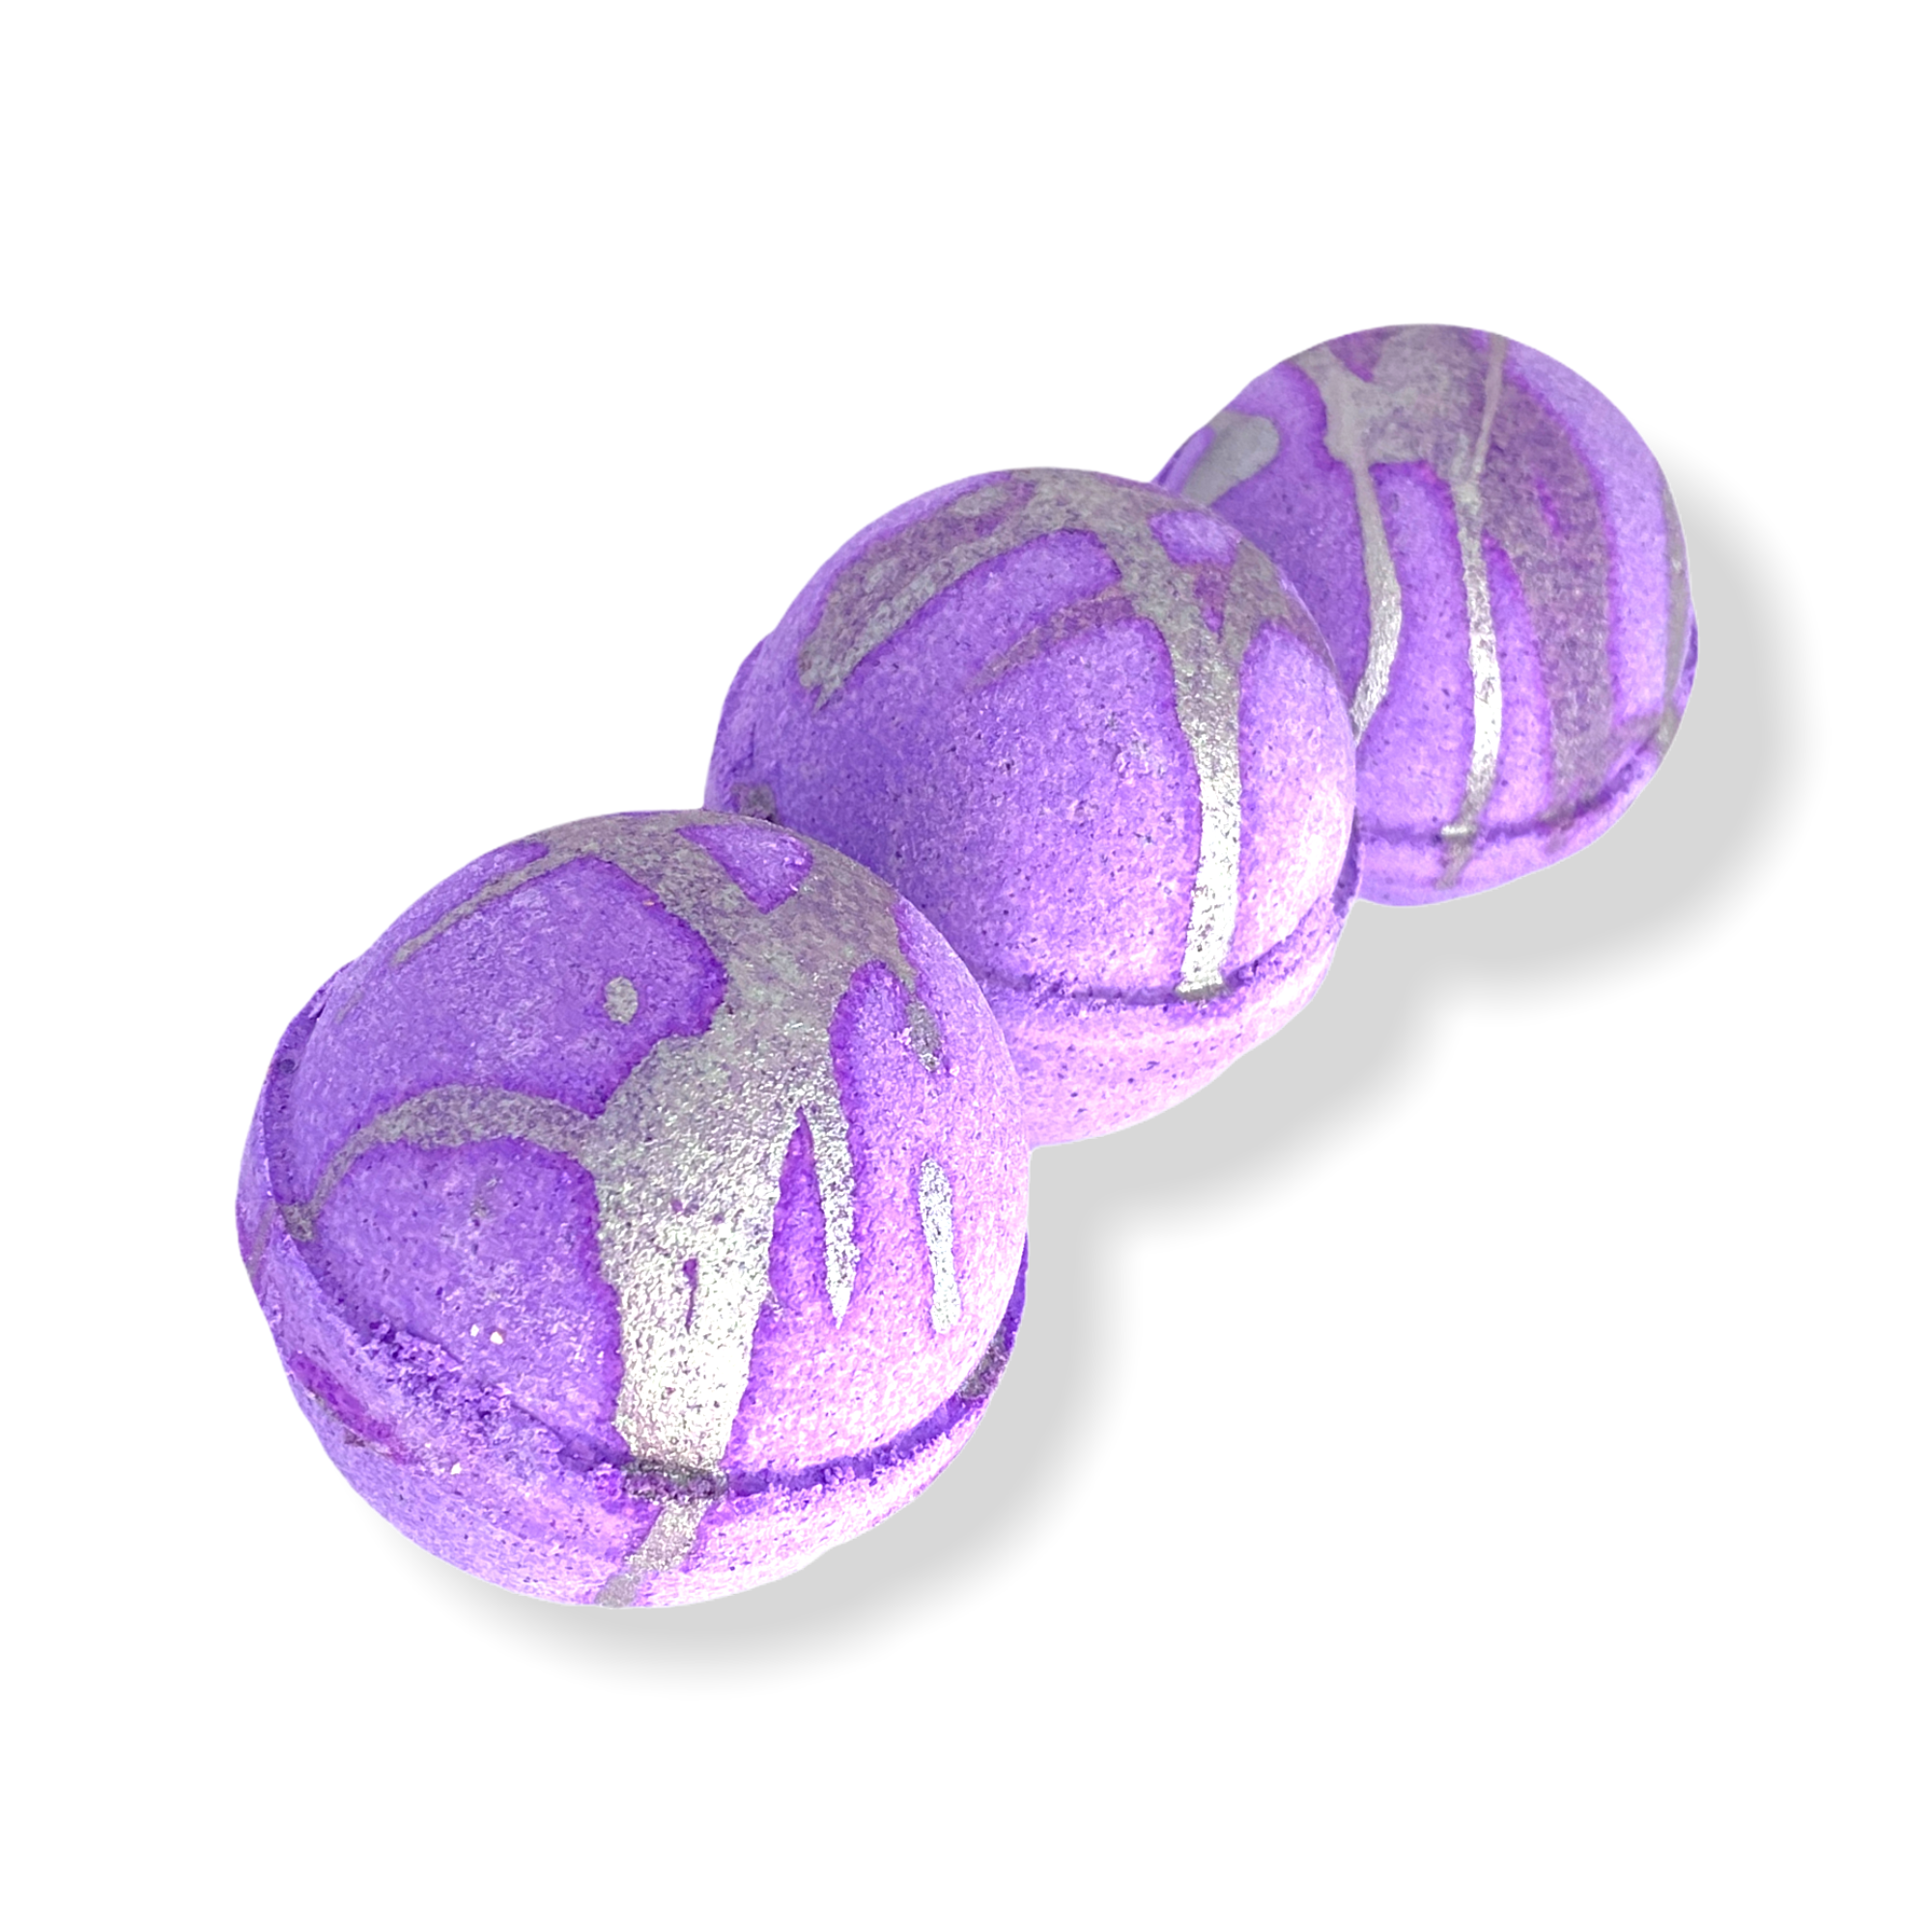 3 purple bath bomb bath bombs with silver decoration